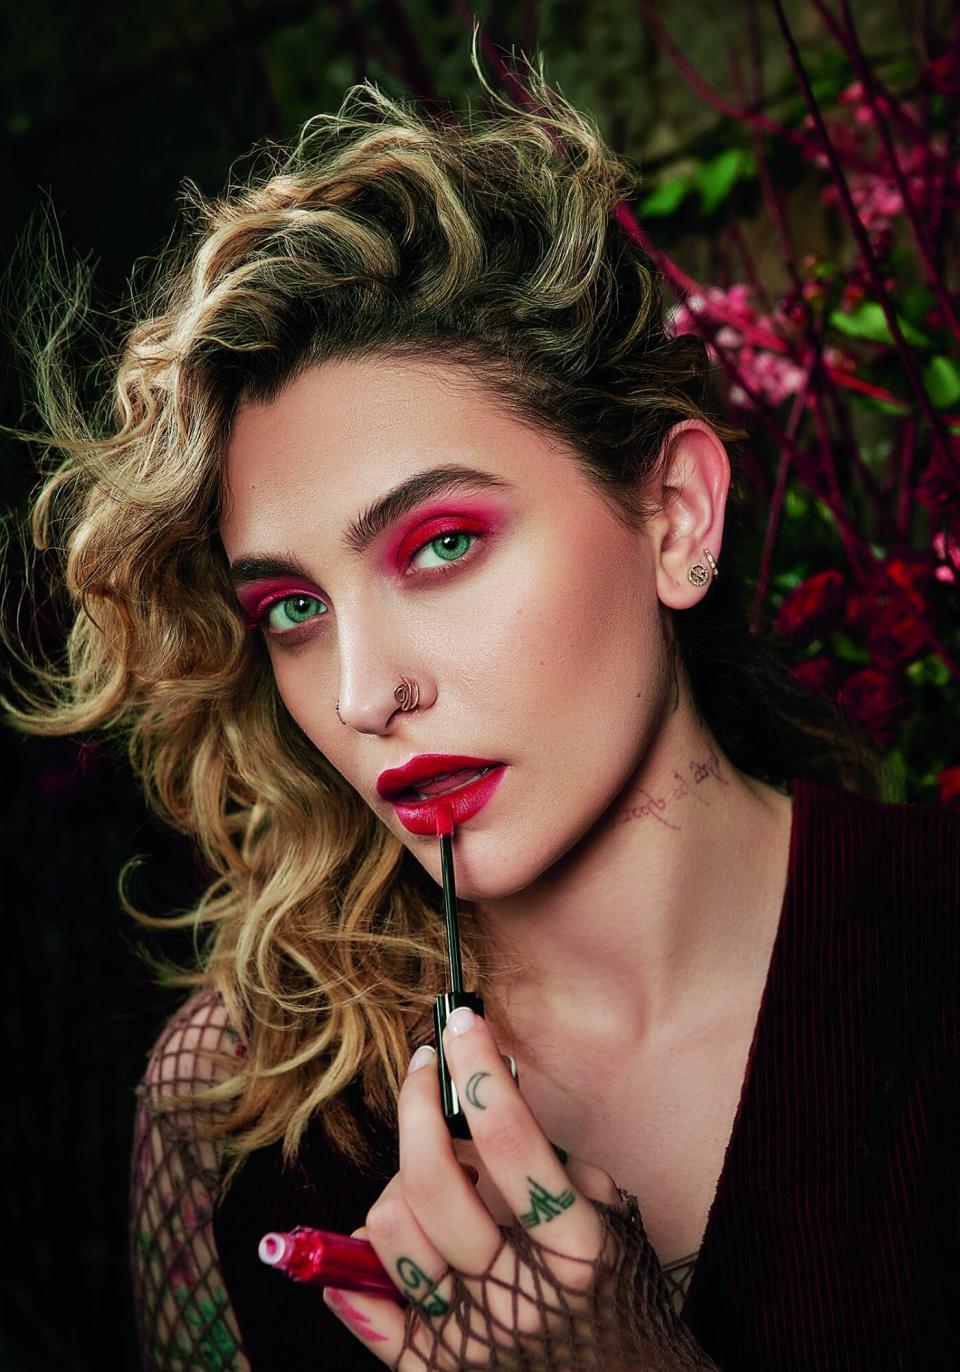 KVD Beauty® Launches New Everlasting Hyperlight Liquid Lipstick: the Evolution of Their Iconic Liquid Lipstick  Featuring Global Brand Face, Paris Jackson